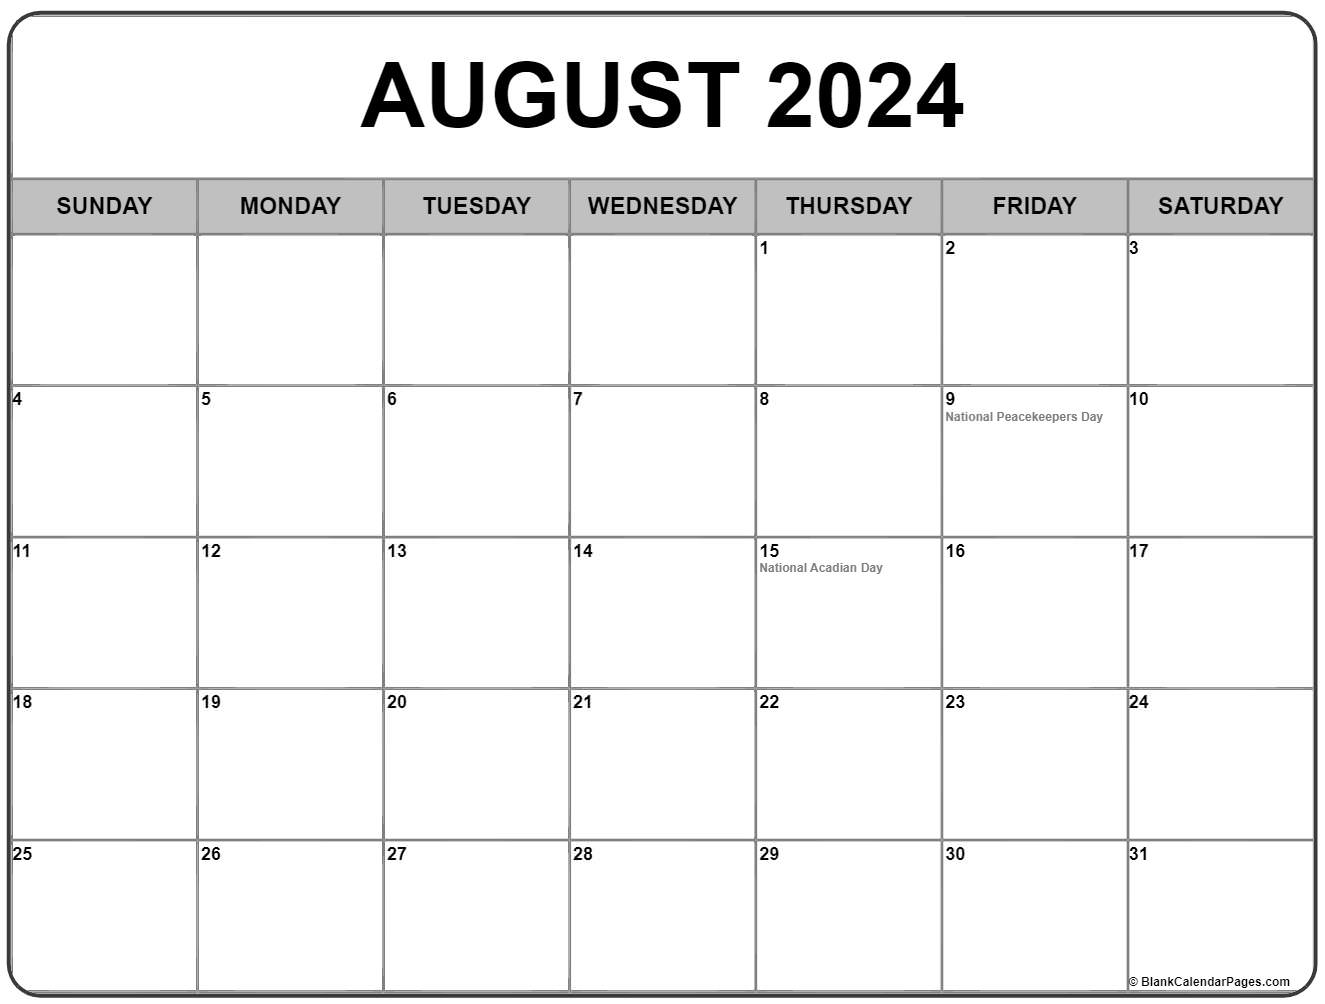 August 2021 Calendar With Holidays August 2021 calendar with holidays